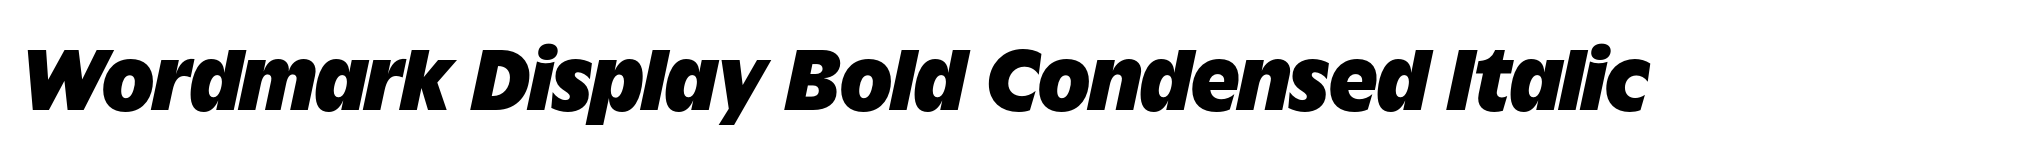 Wordmark Display Bold Condensed Italic image